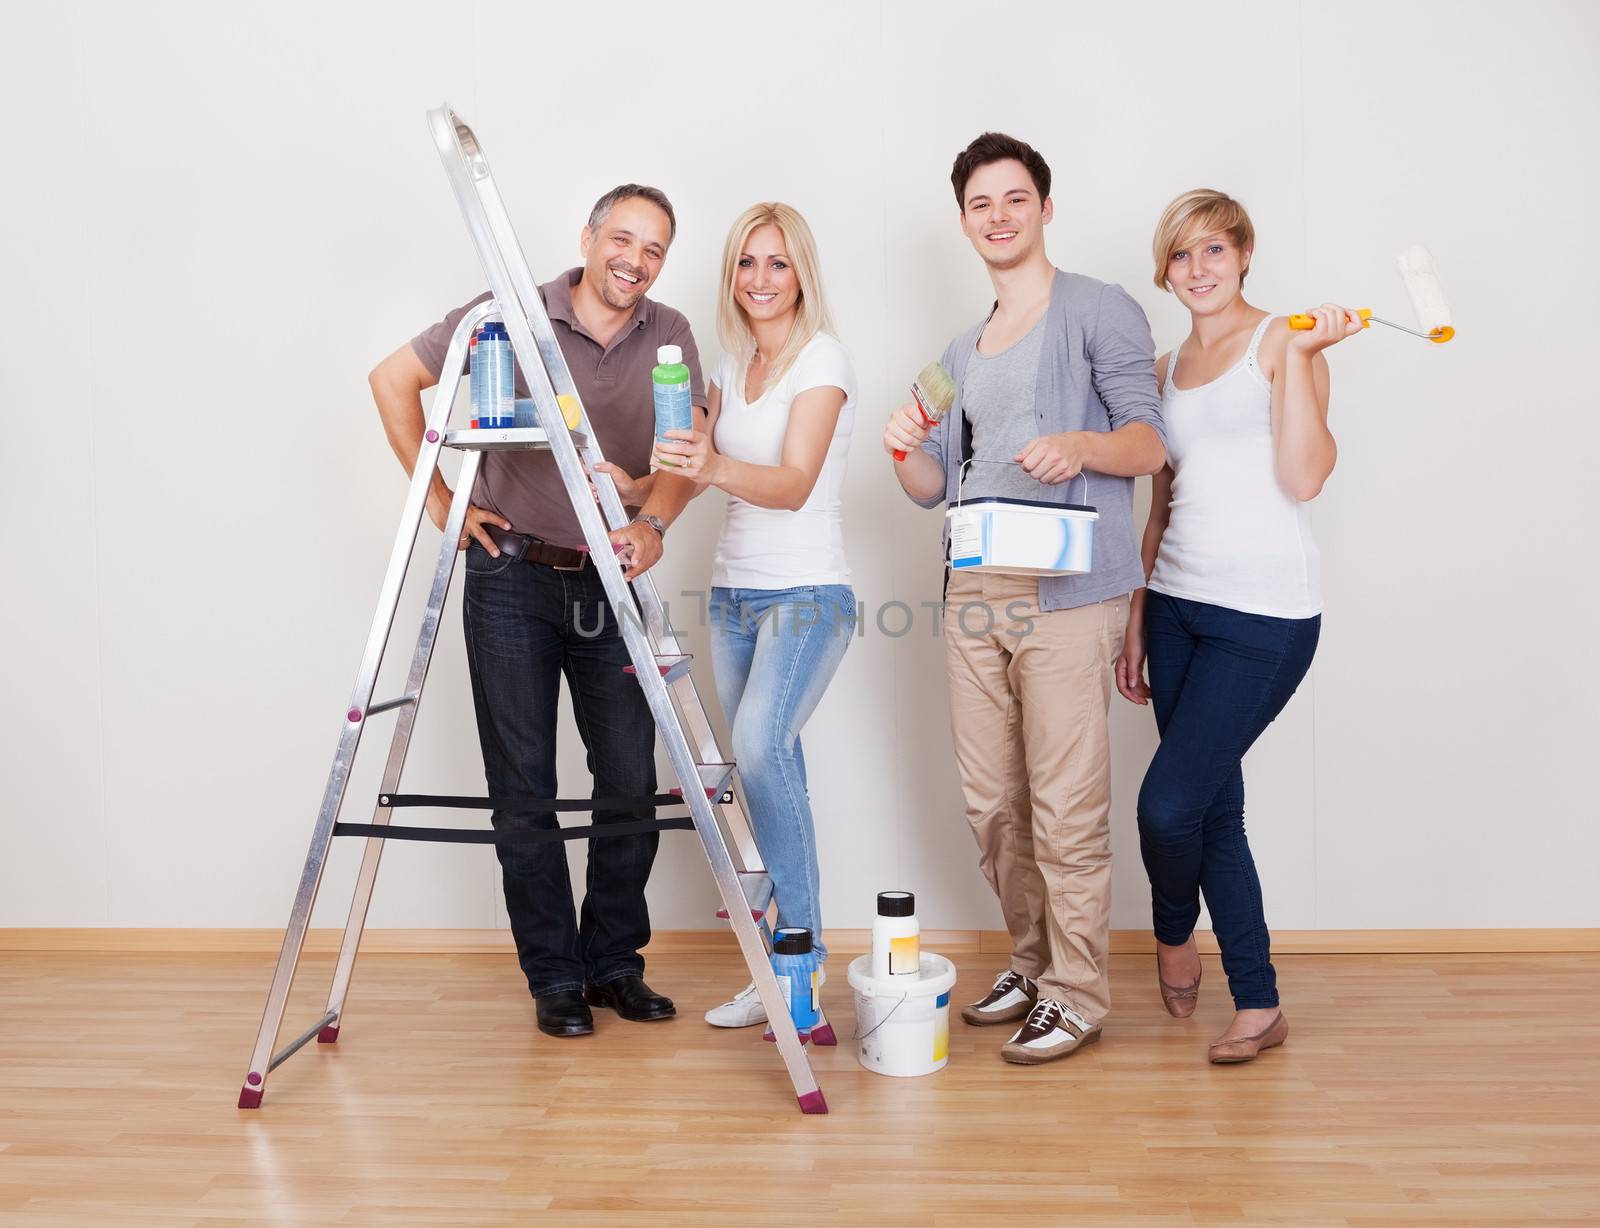 Home maintenance repair team by AndreyPopov